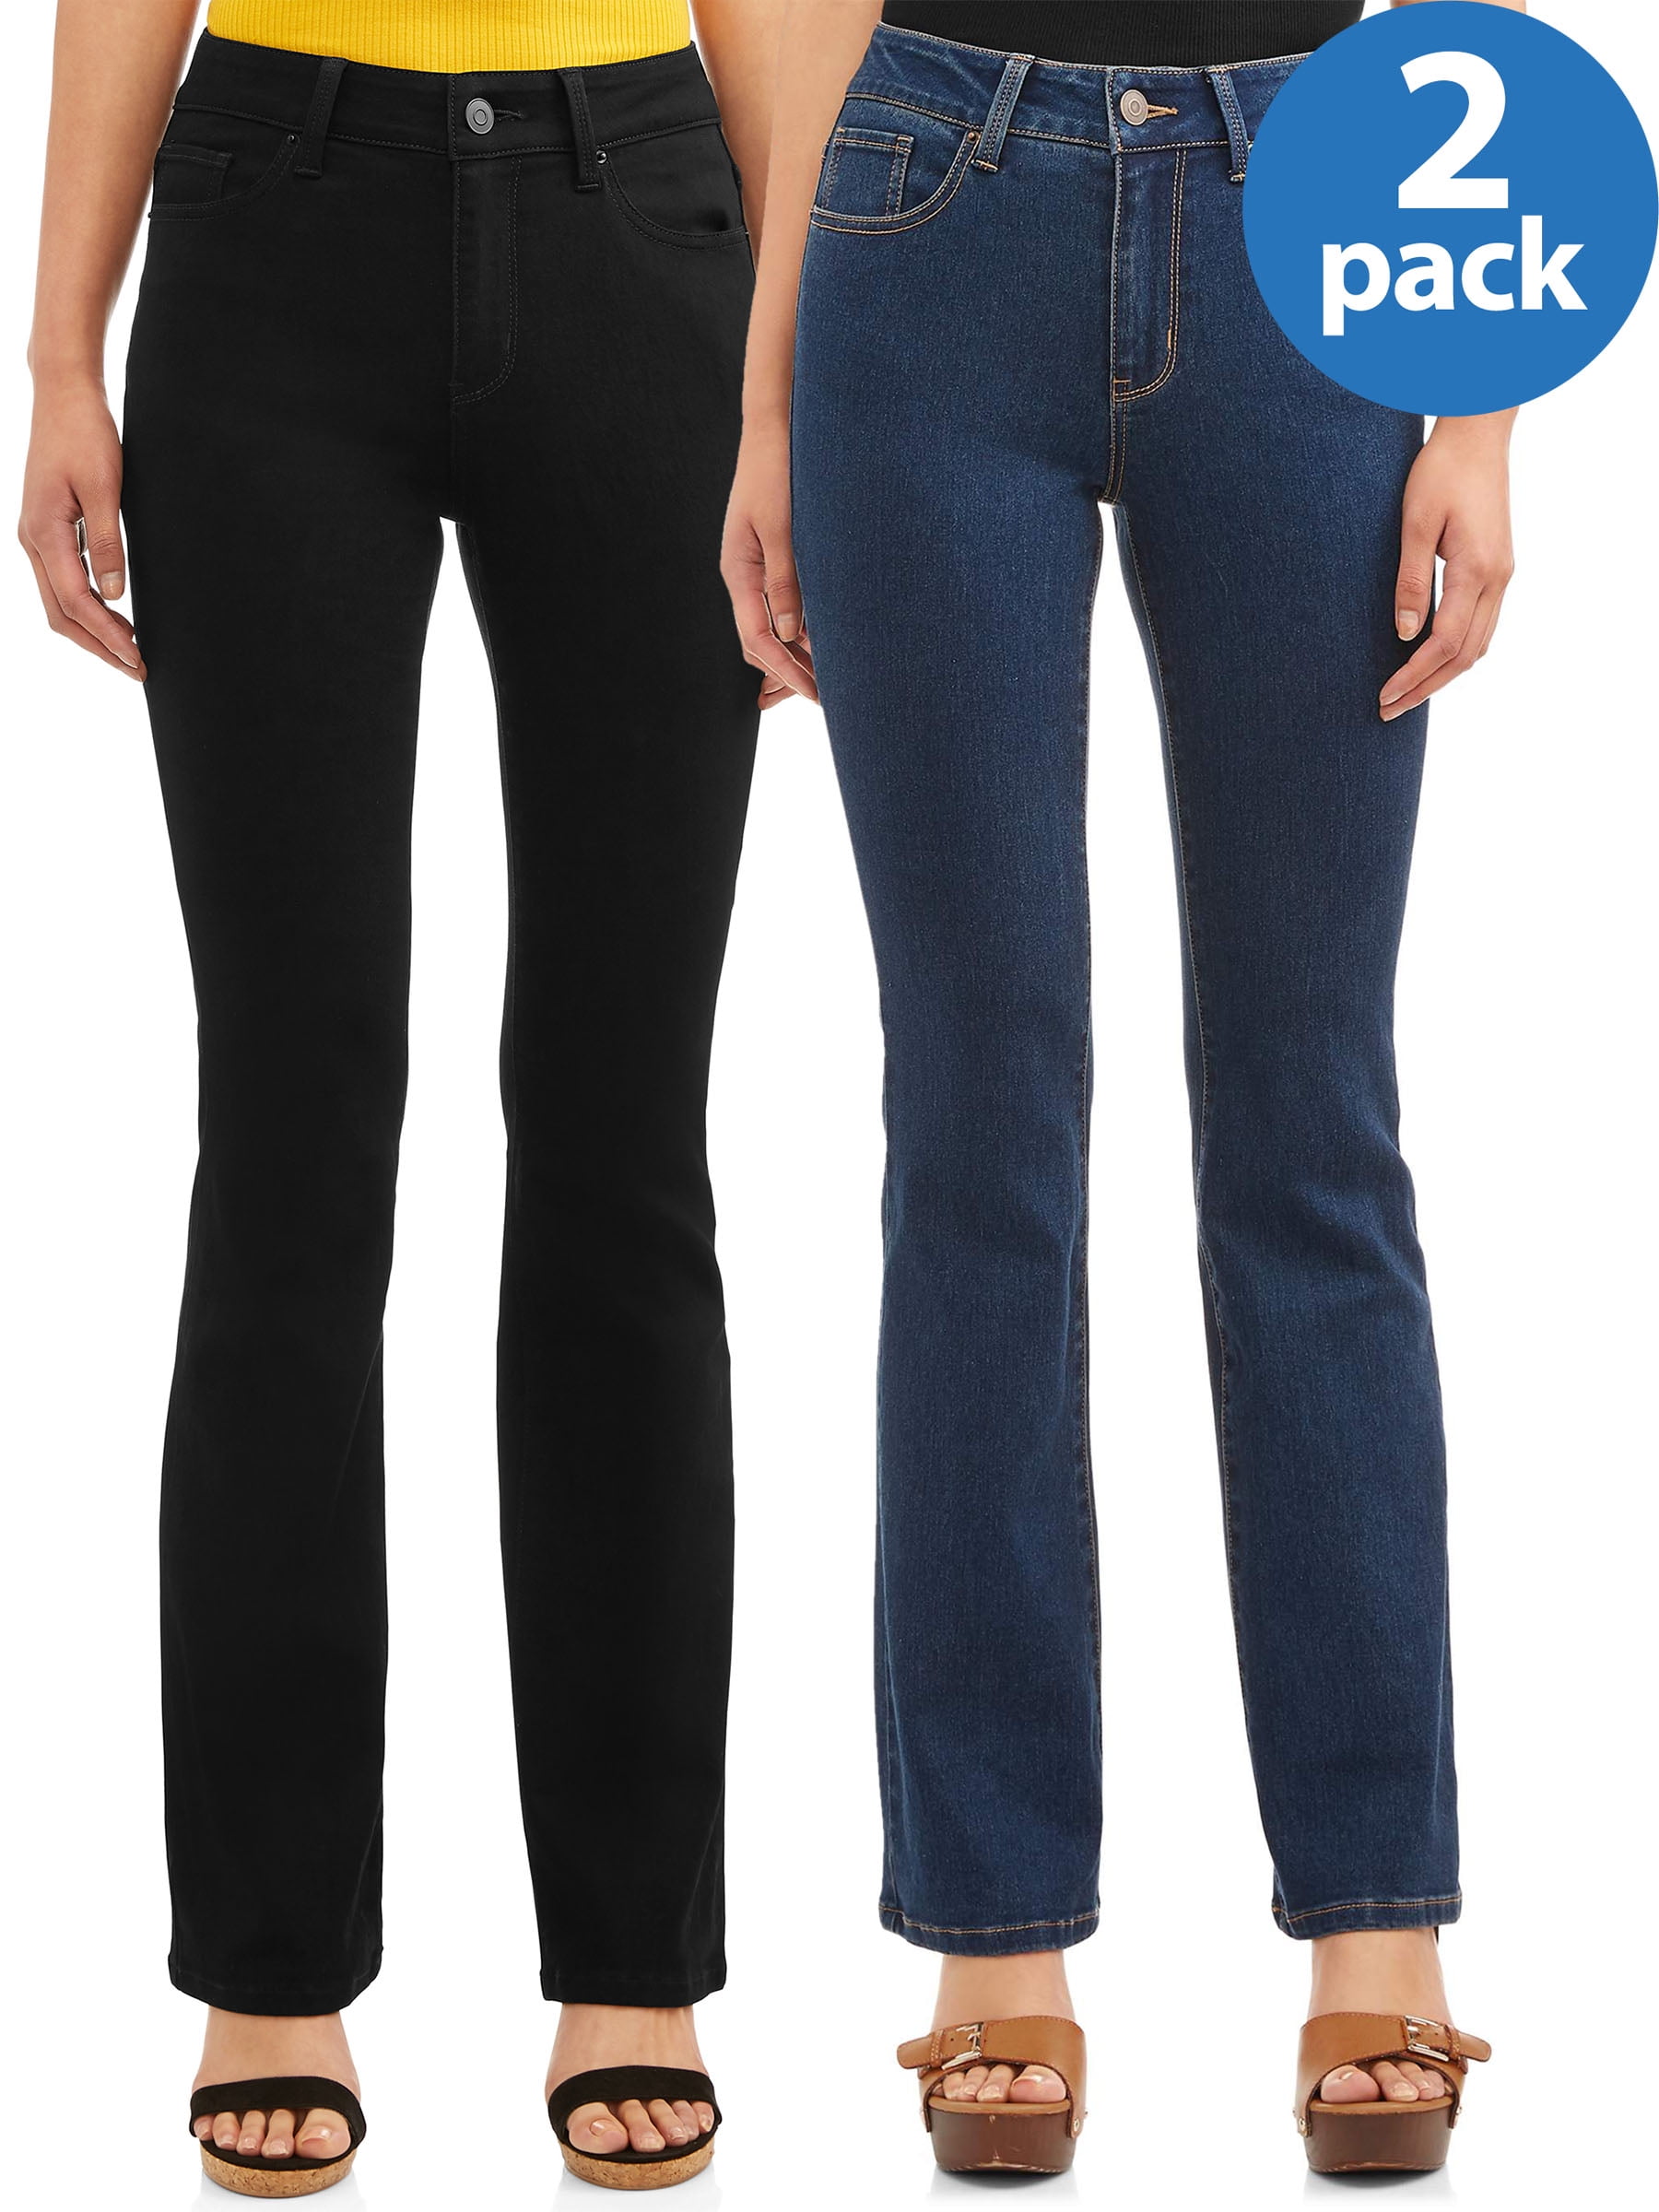 Walmart No Boundaries Jeans Size Chart